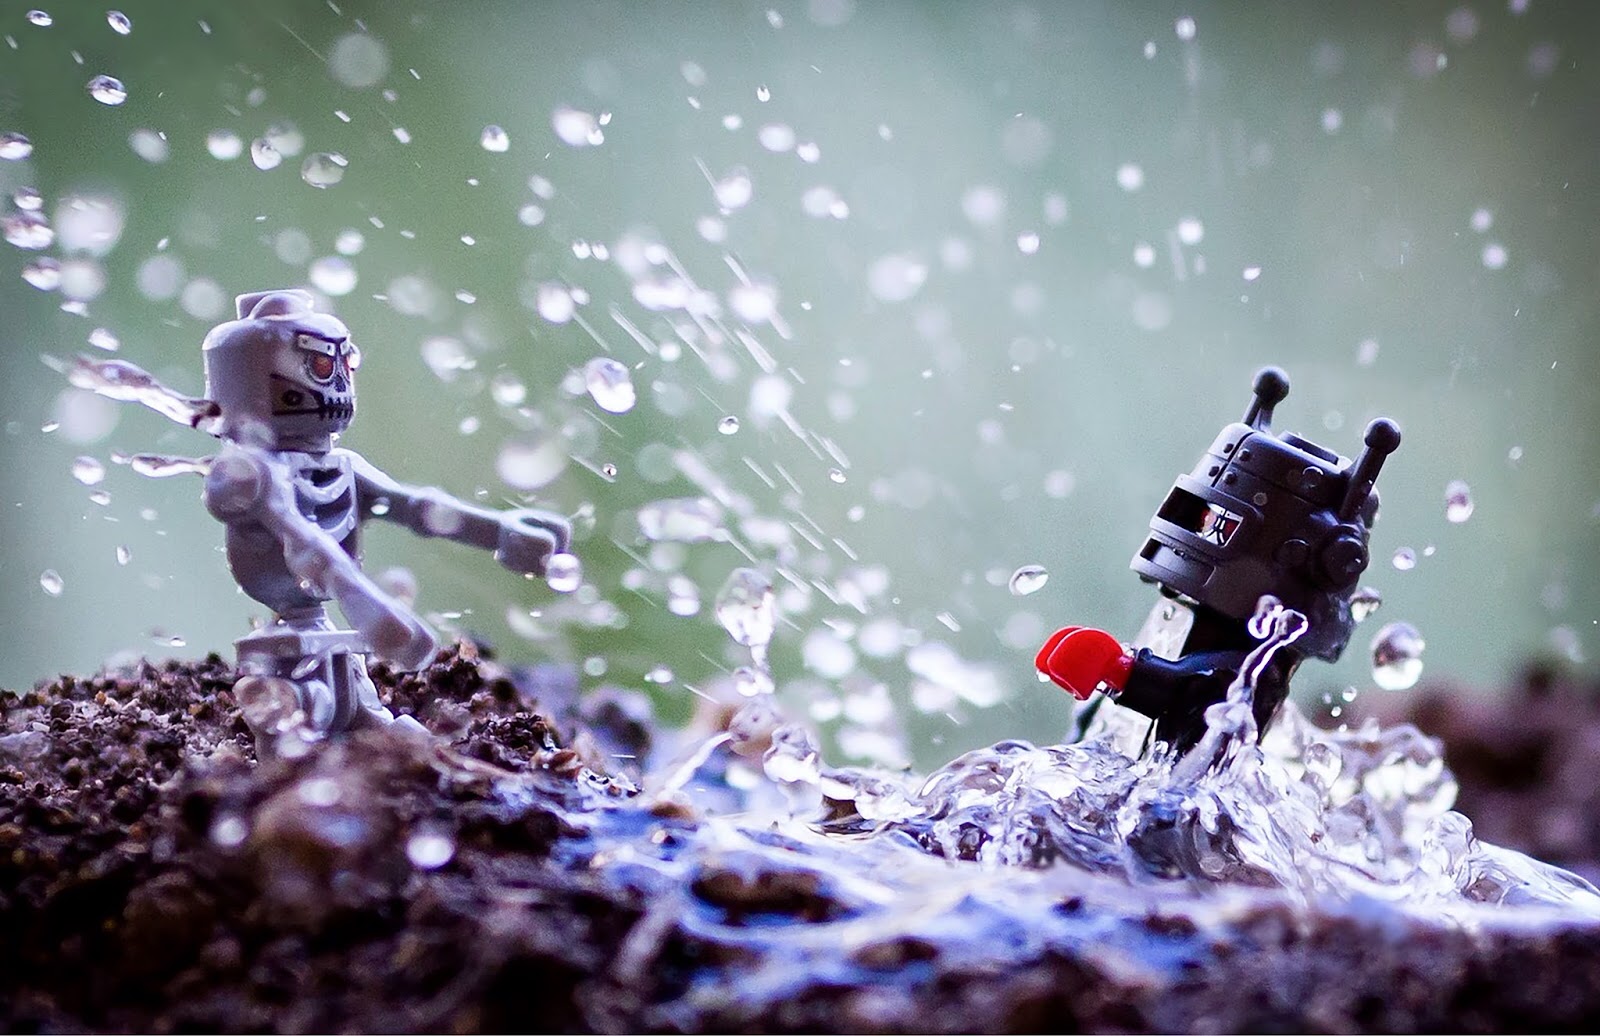 Beautiful Lego artwork makes use of minifig micro-photography to make fantasy epics